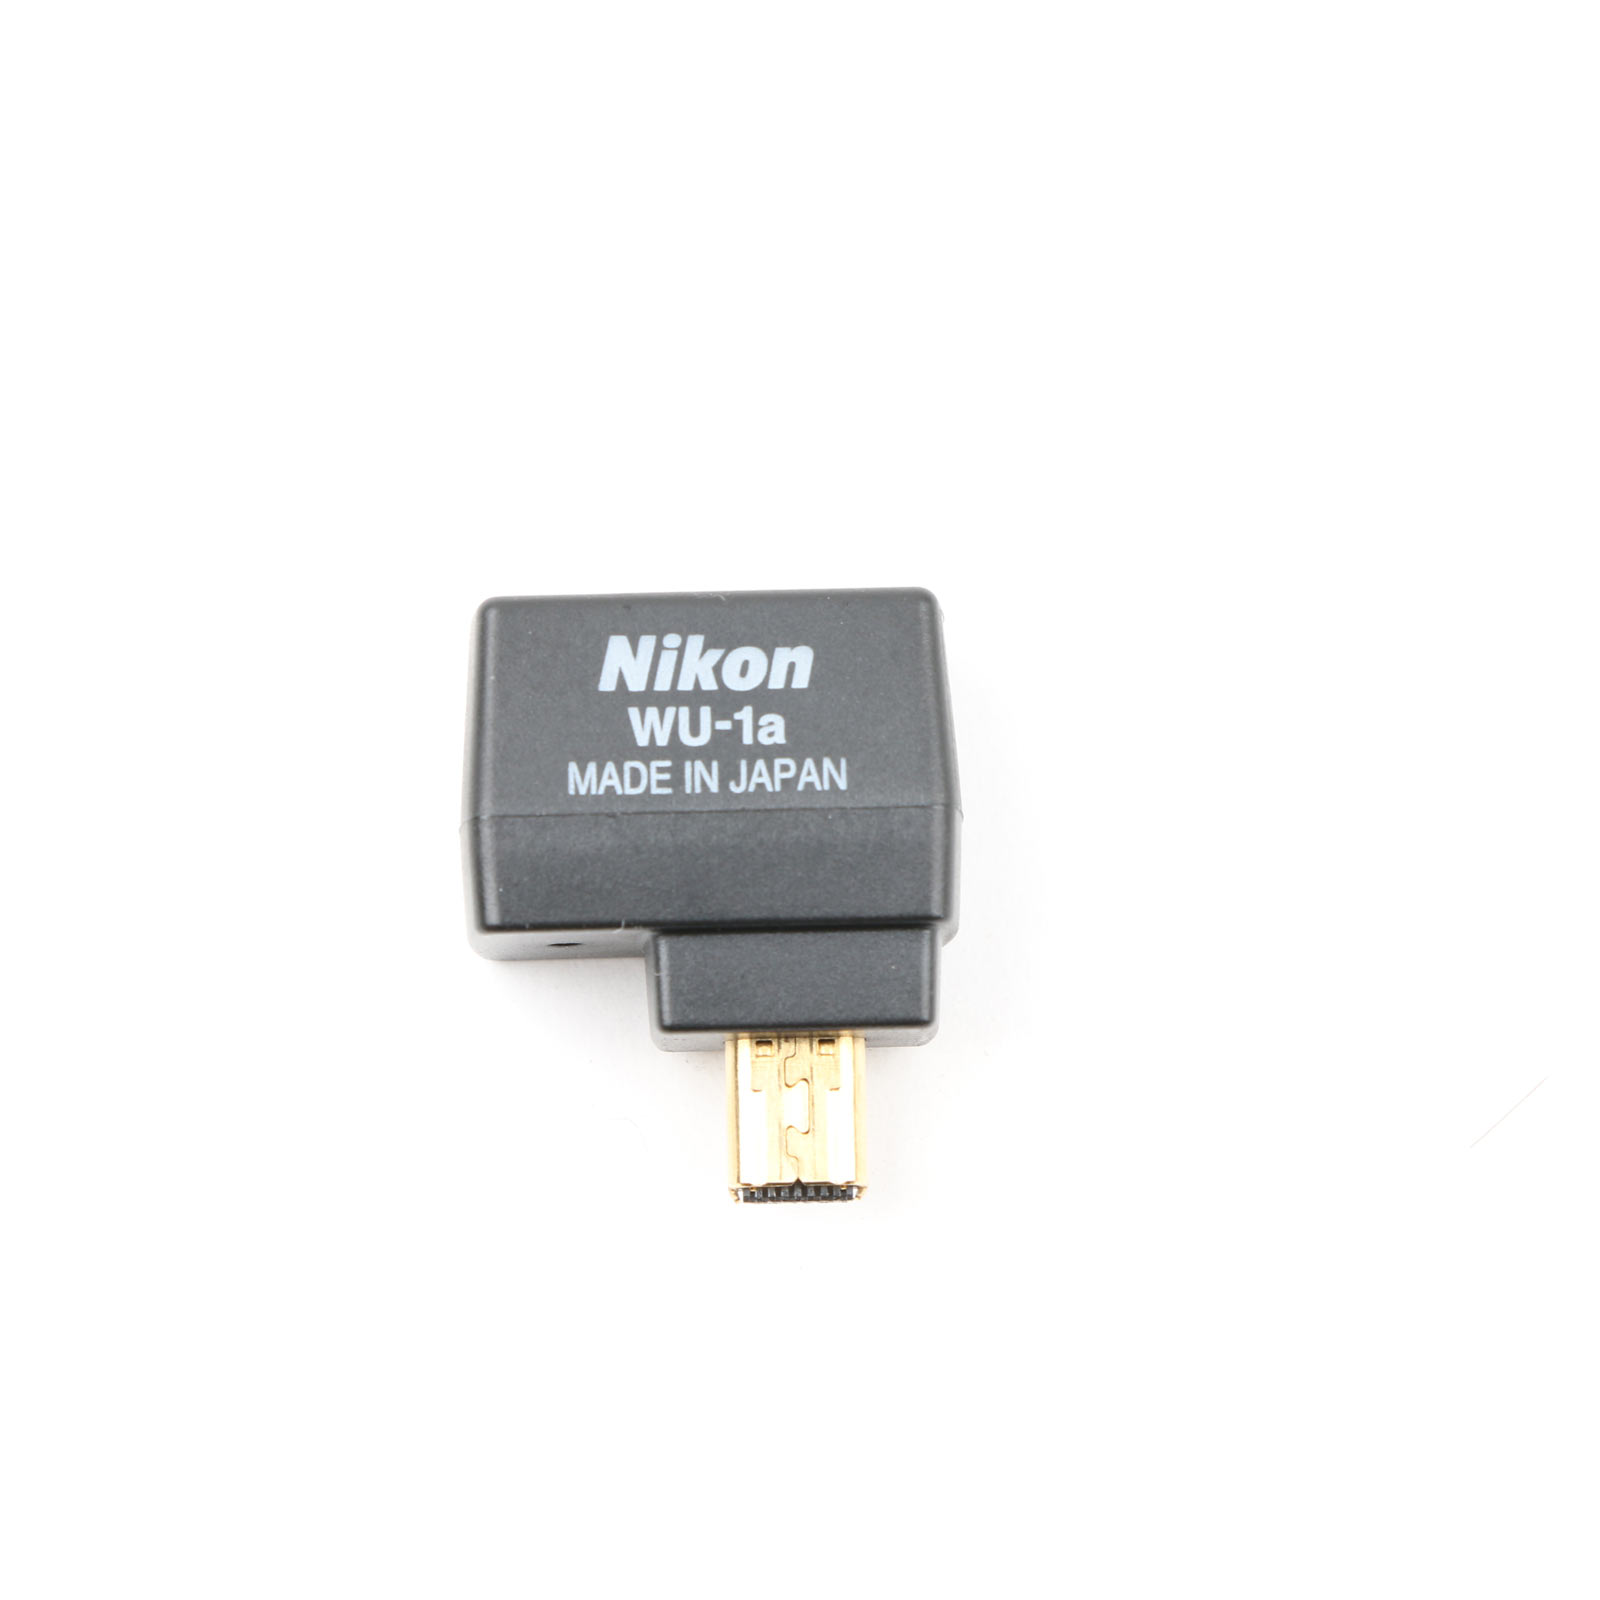 used nikon wu-1a wireless mobile adapter